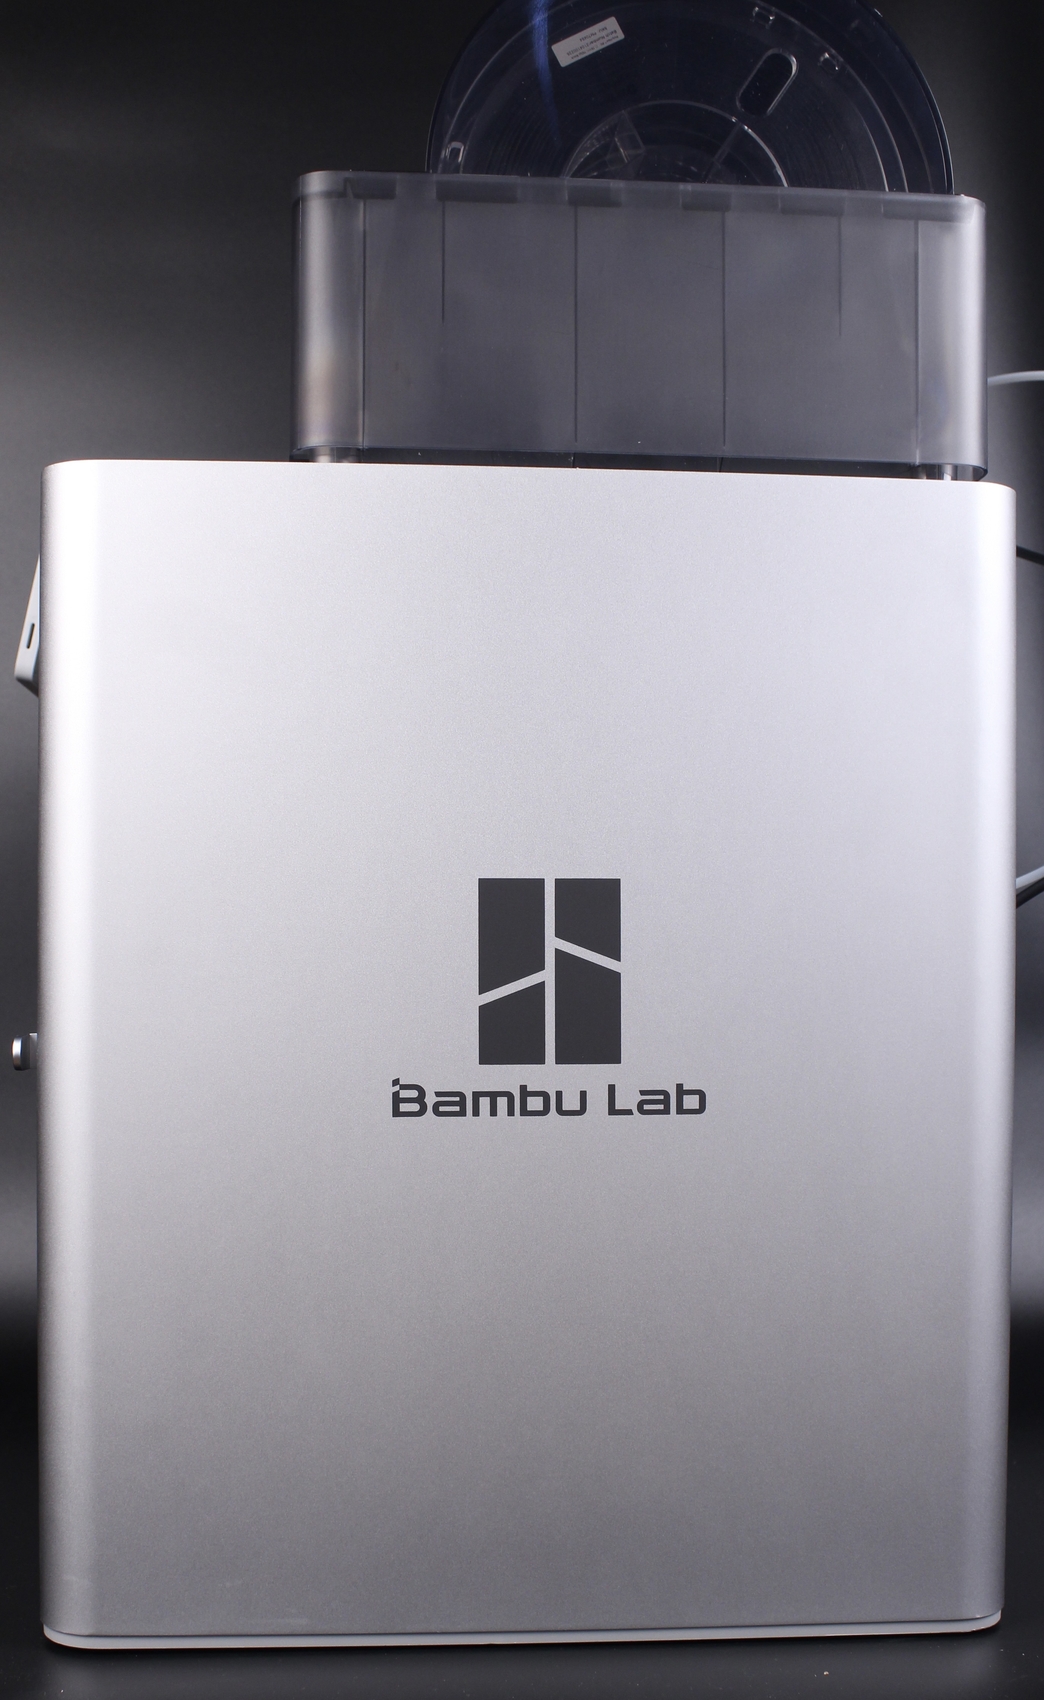 Bambu Lab X1 Carbon Design2 | Bambu Lab X1 Carbon Review: Living in the Future